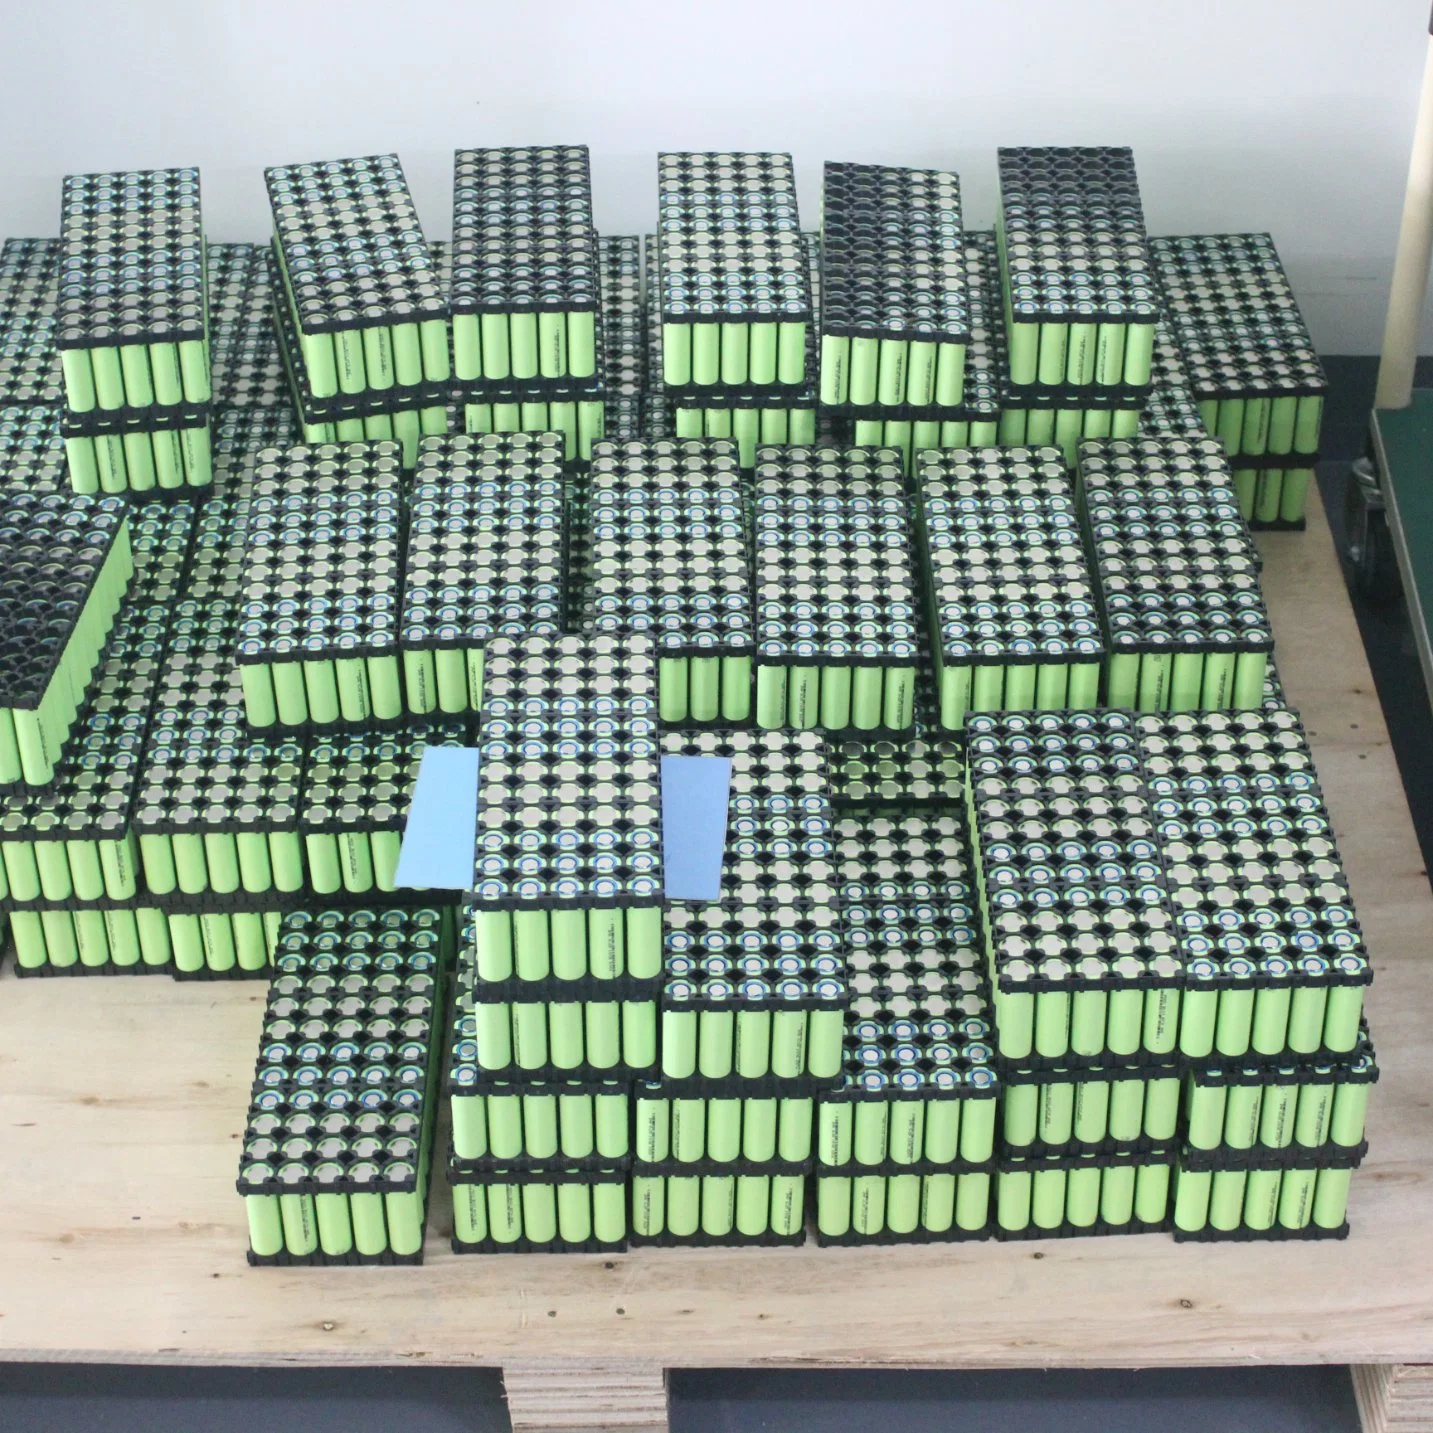 Garden Tool Battery 3s Li-ion Batteries for Lawn Mower